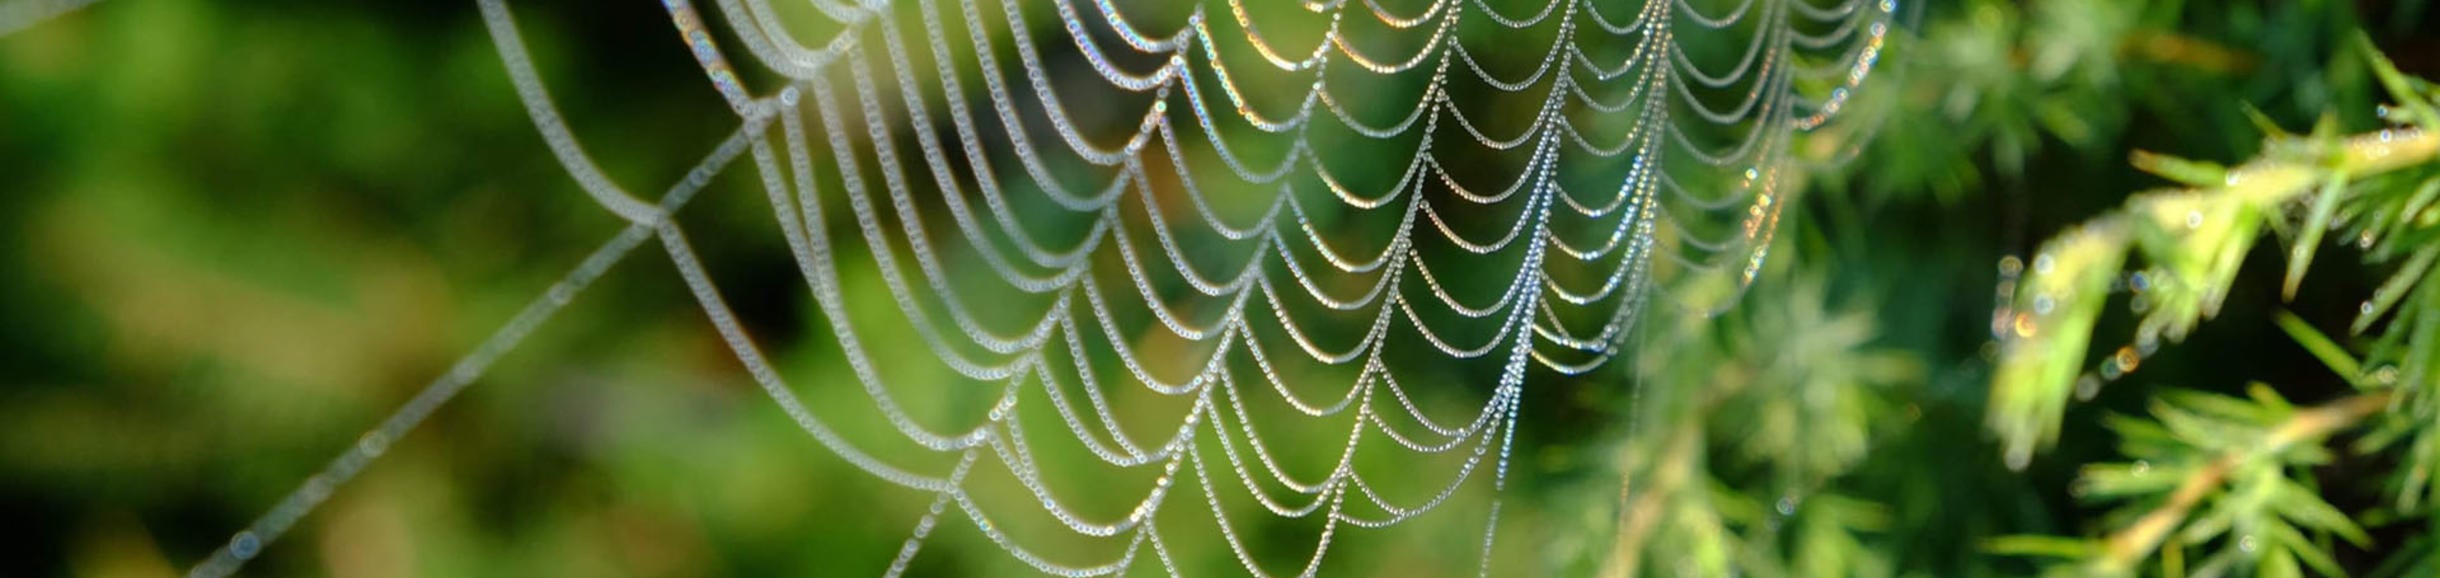 Spider web, free stock image from unsplash.com